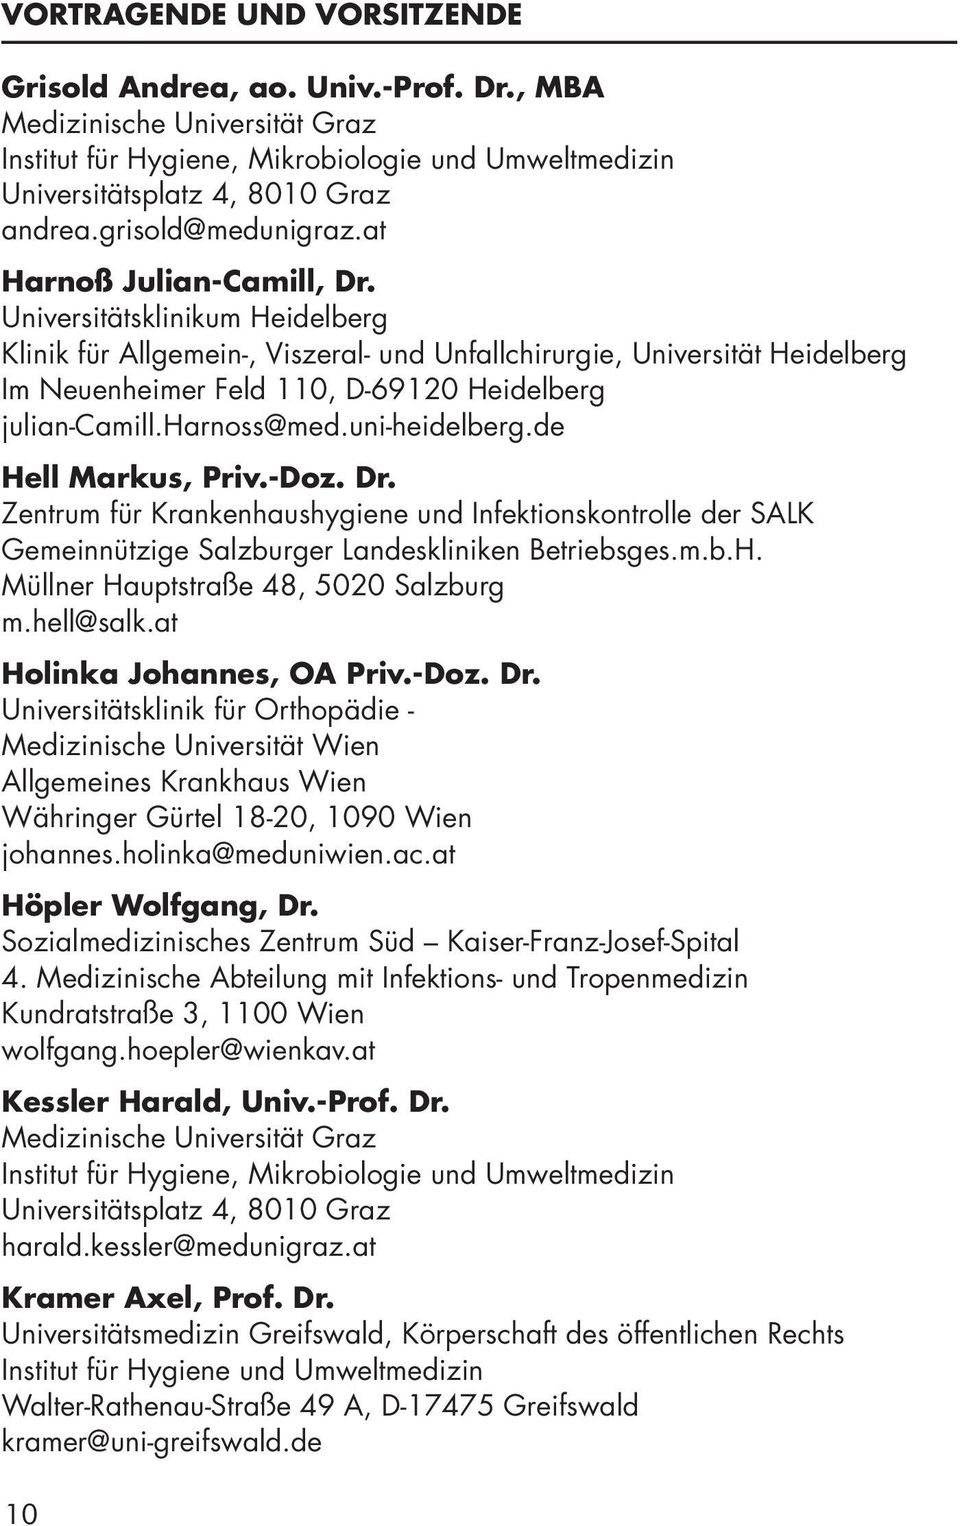 Universitätsklinikum Heidelberg Klinik für Allgemein-, Viszeral- und Unfallchirurgie, Universität Heidelberg Im Neuenheimer Feld 110, D-69120 Heidelberg julian-camill.harnoss@med.uni-heidelberg.